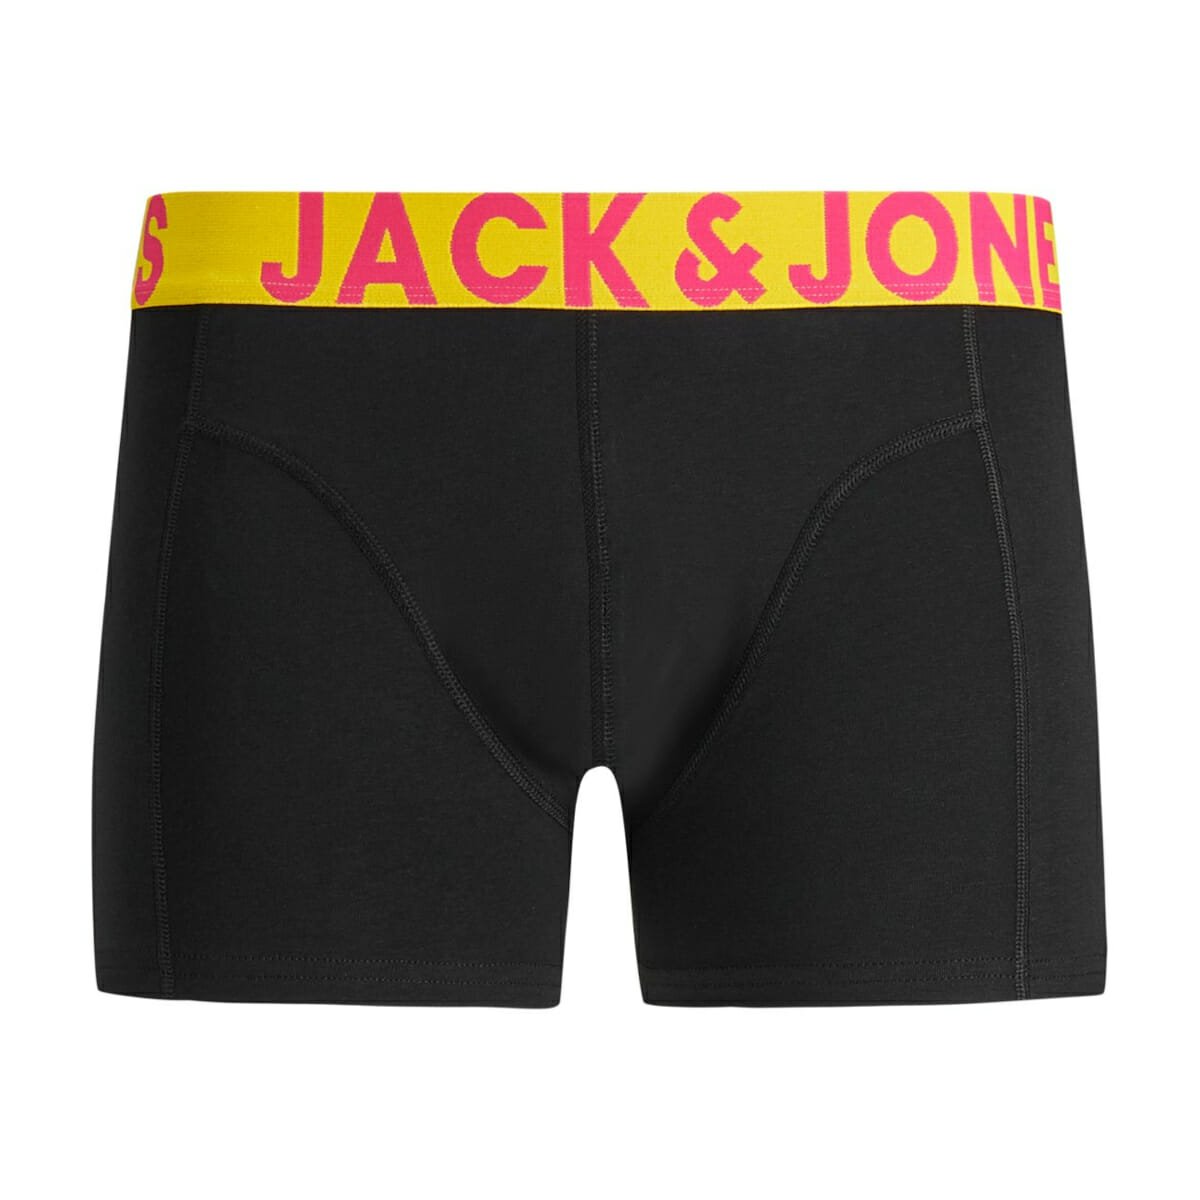 JACK & JONES JACCRAZY boxerit 3kpl, Black/Navy Blazer